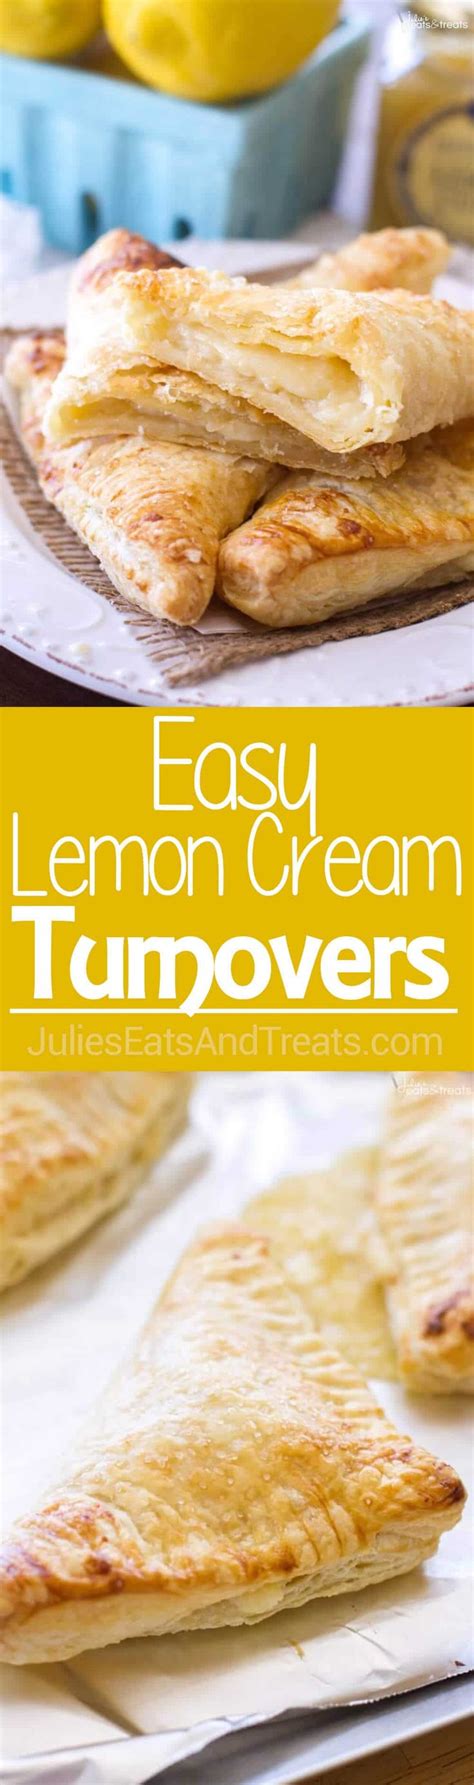 Lemon Cream Turnovers Recipe ~ This Easy Lemon Cream Turnover Recipe